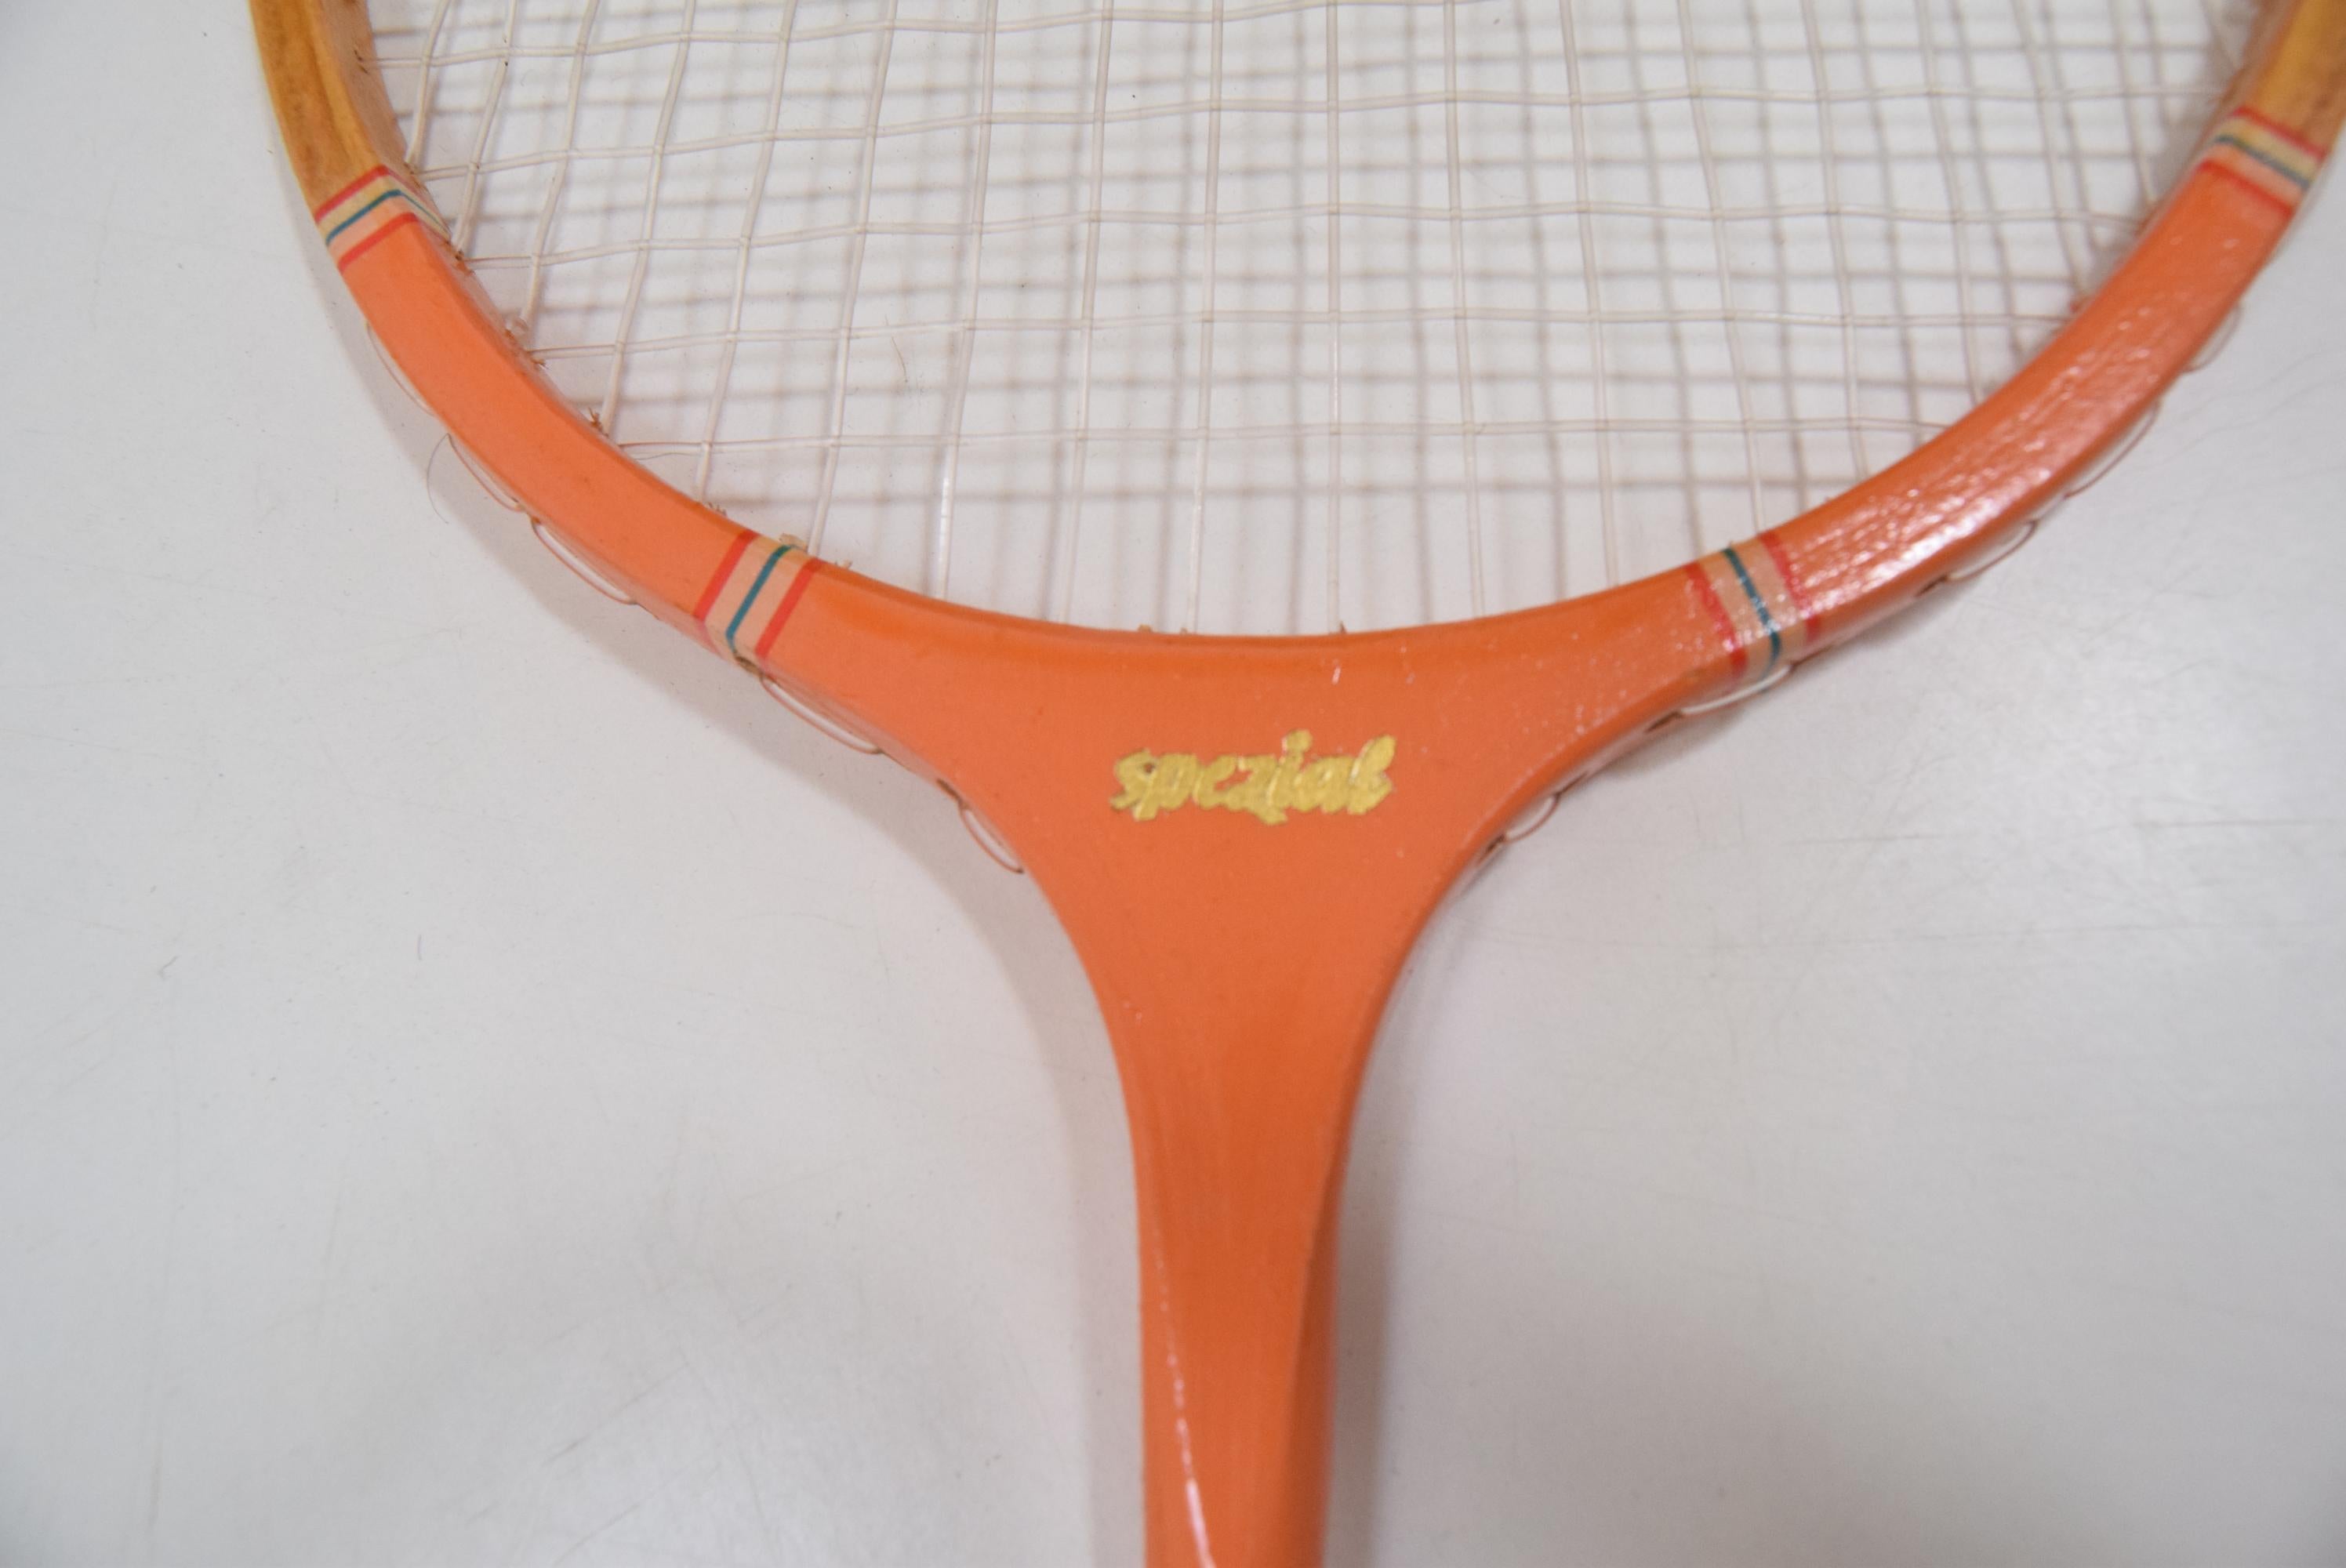 German Pair of Vintage Badminton Rackets, circa 1980's